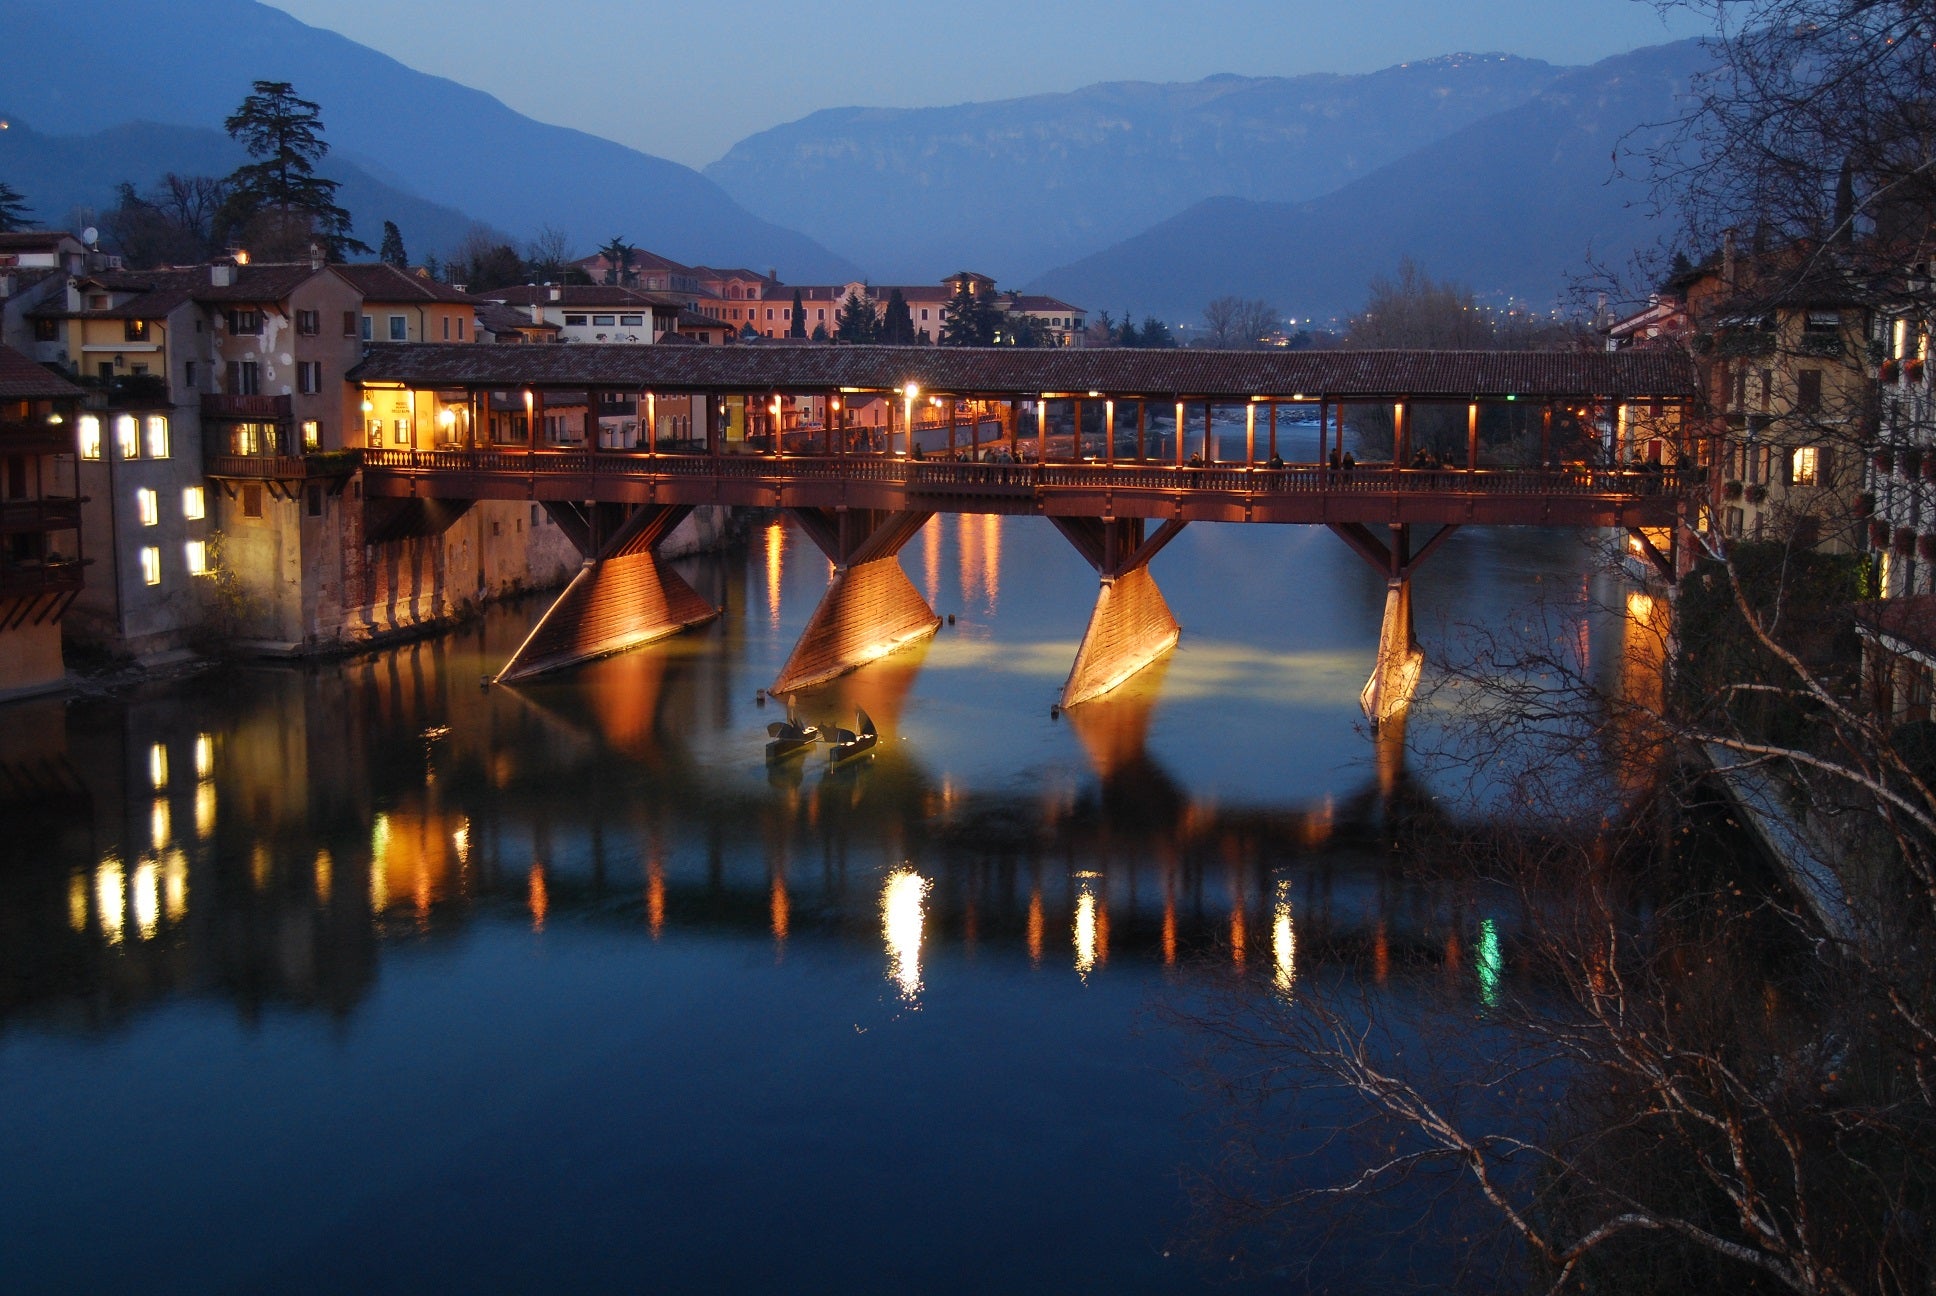 night foto of the "Ponte degli Alpini" bridge